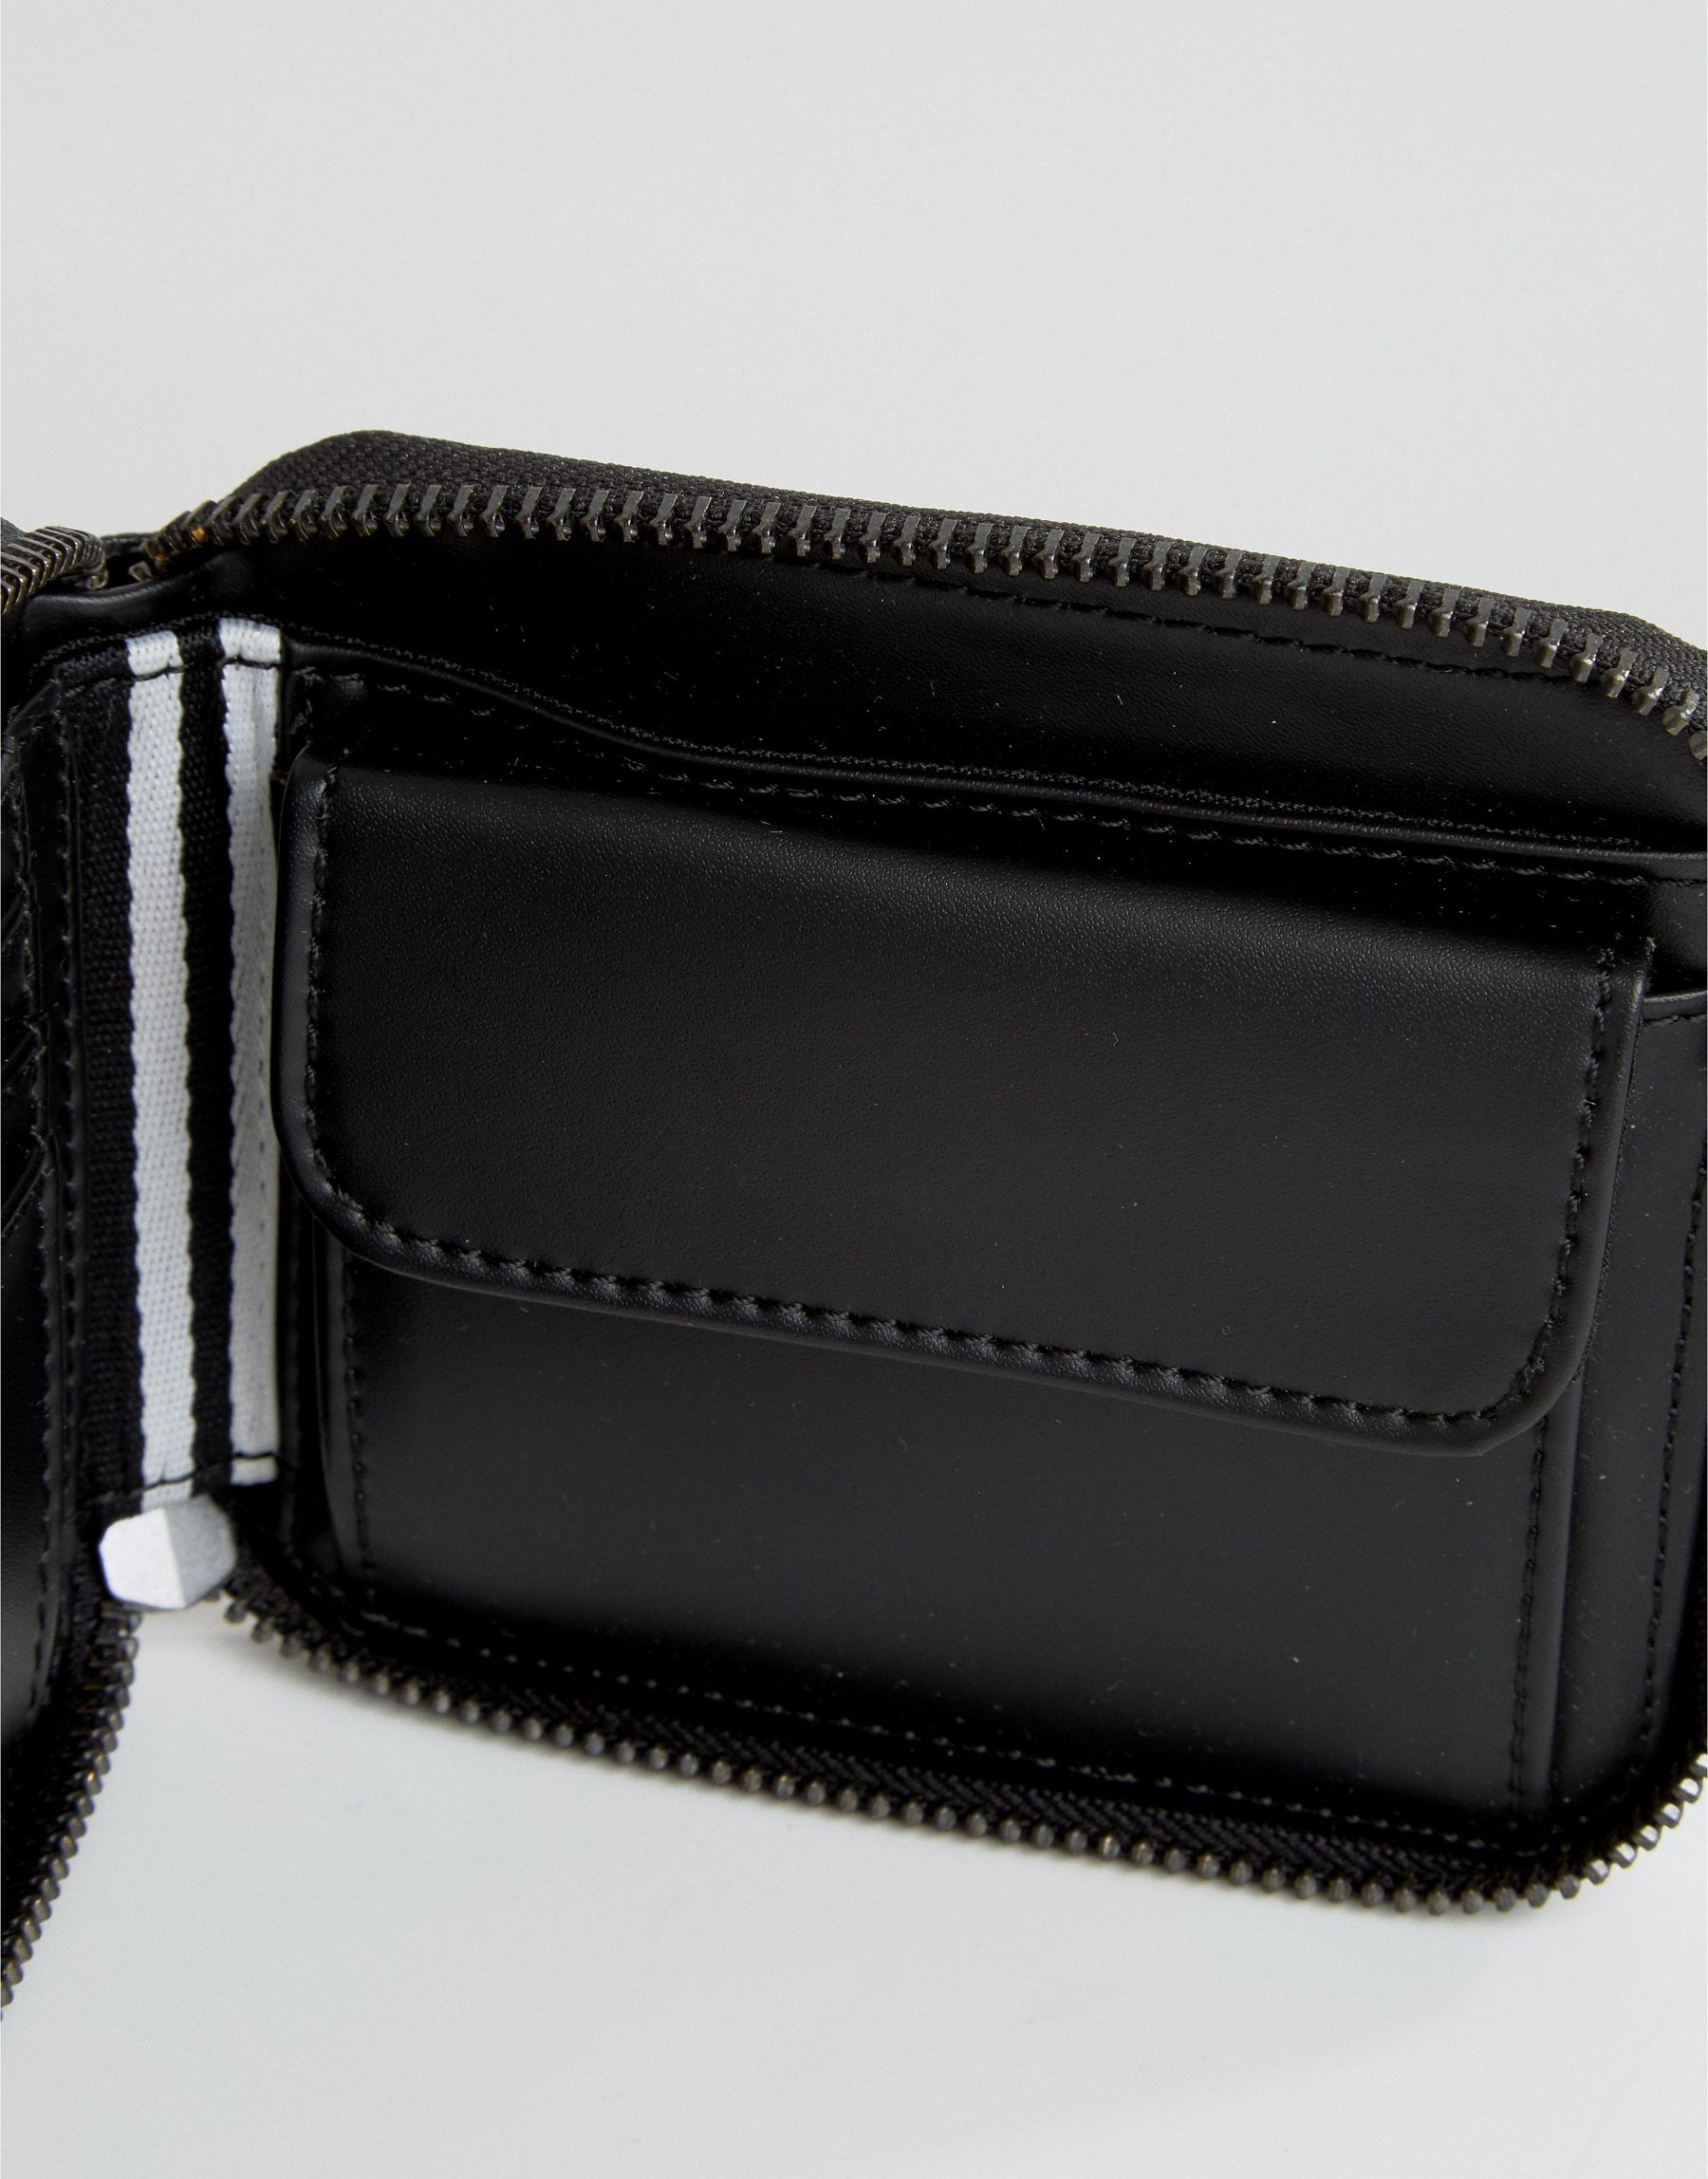 Lyst - Fred Perry Scotch Grain Zip Around Wallet in Black for Men